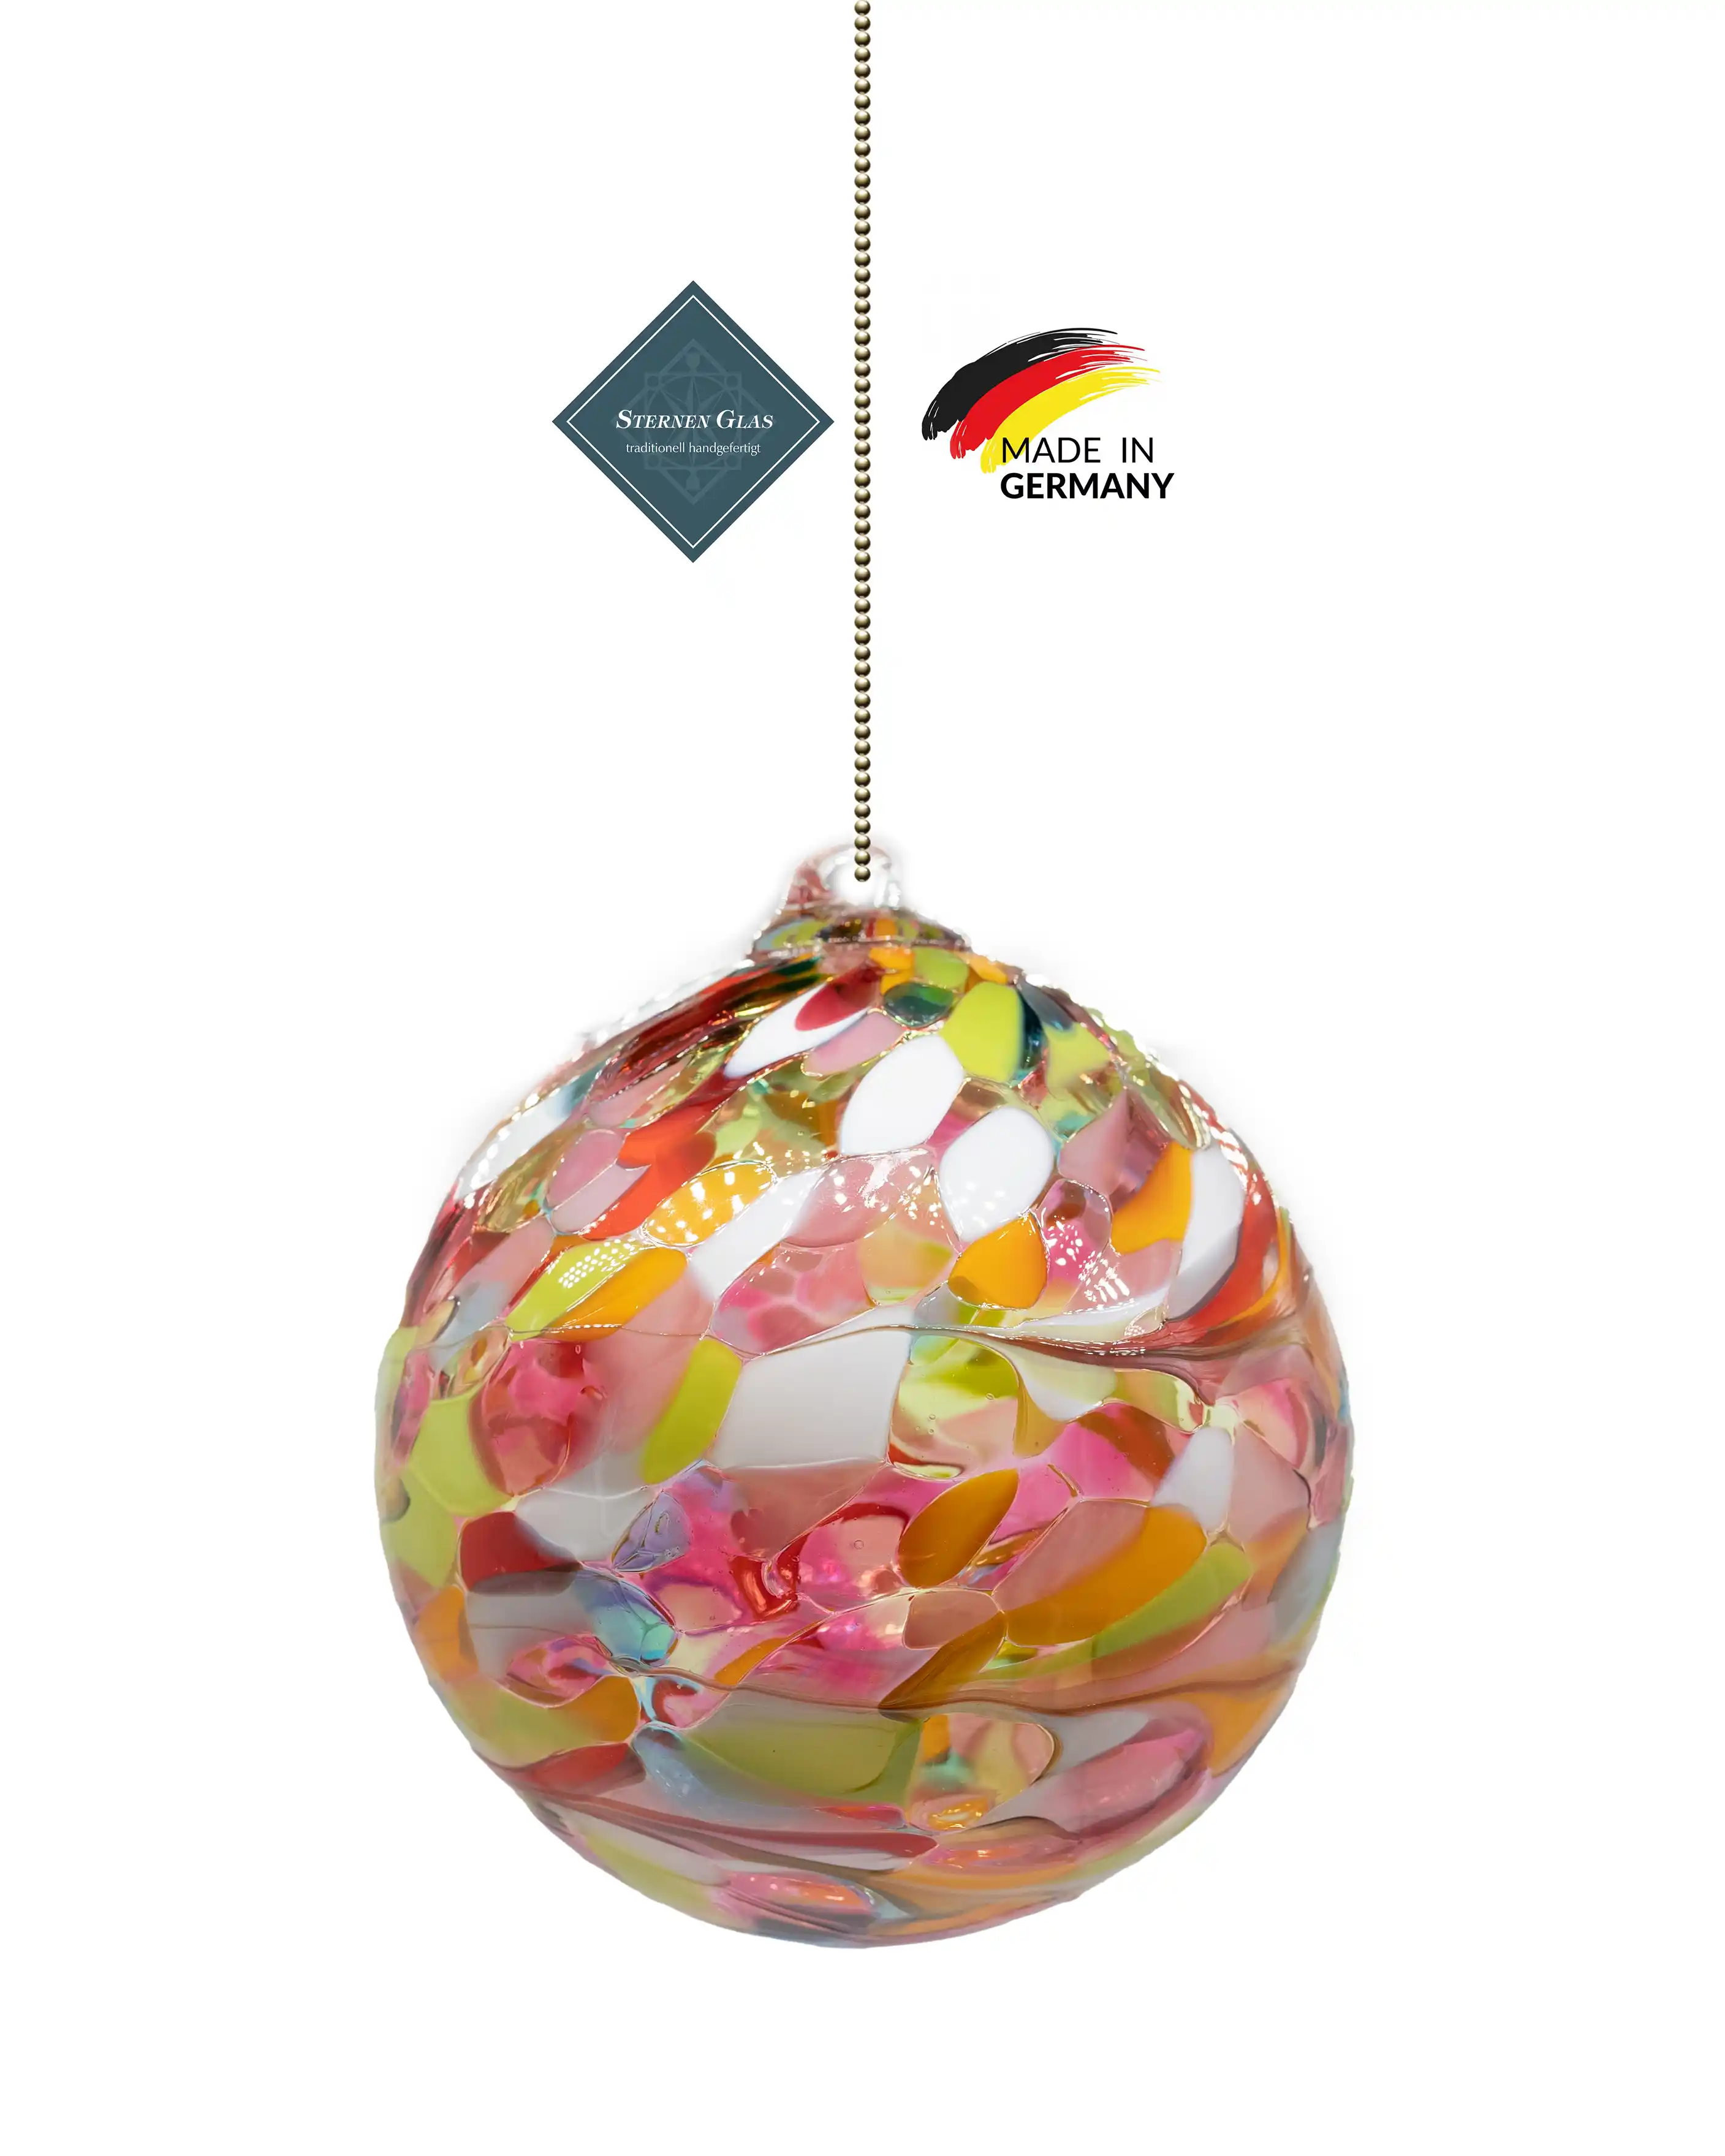 STERNEN GLAS | Glass Sphere